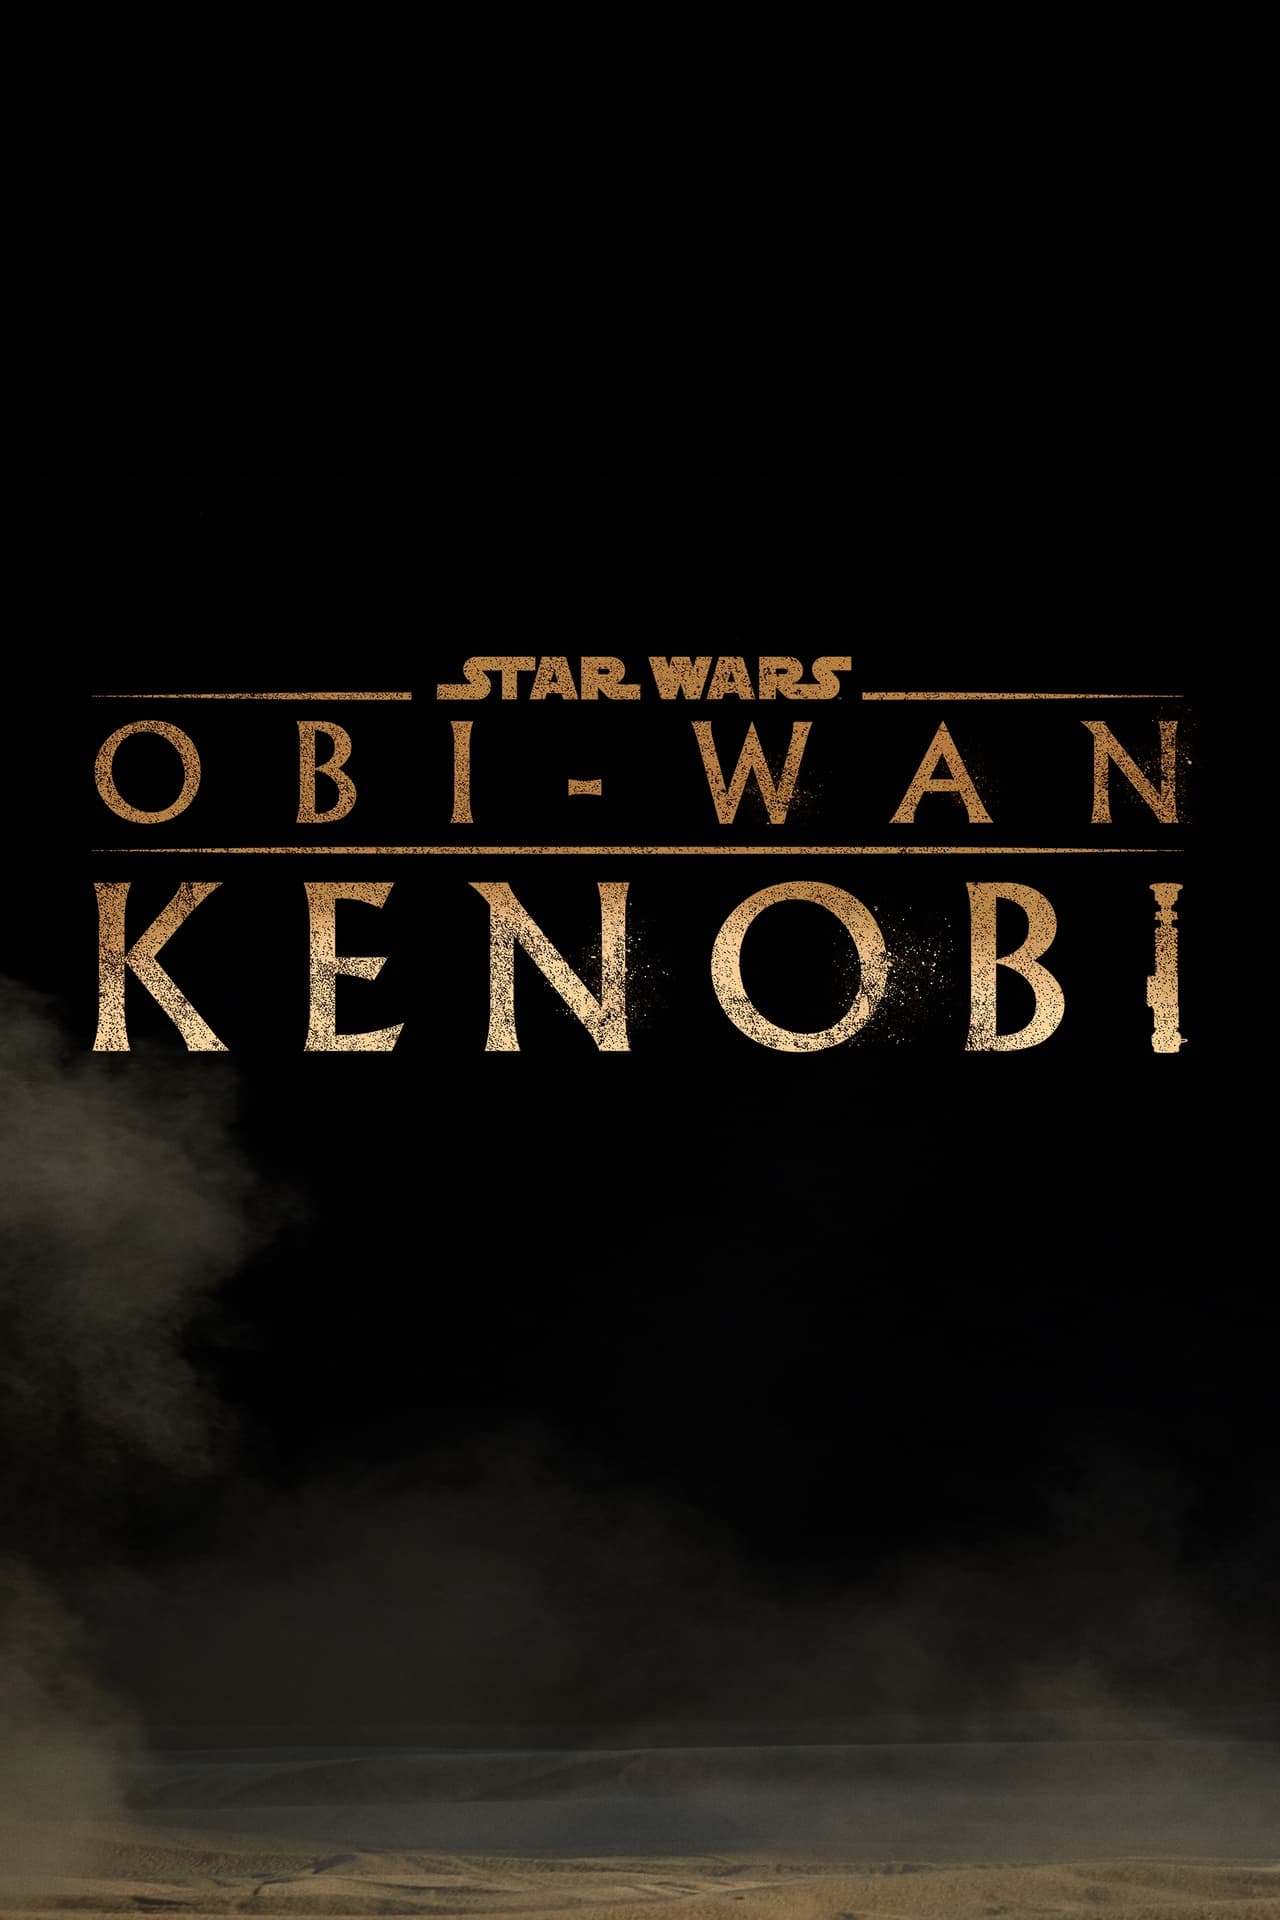 Obi-Wan Kenobi (season 1)